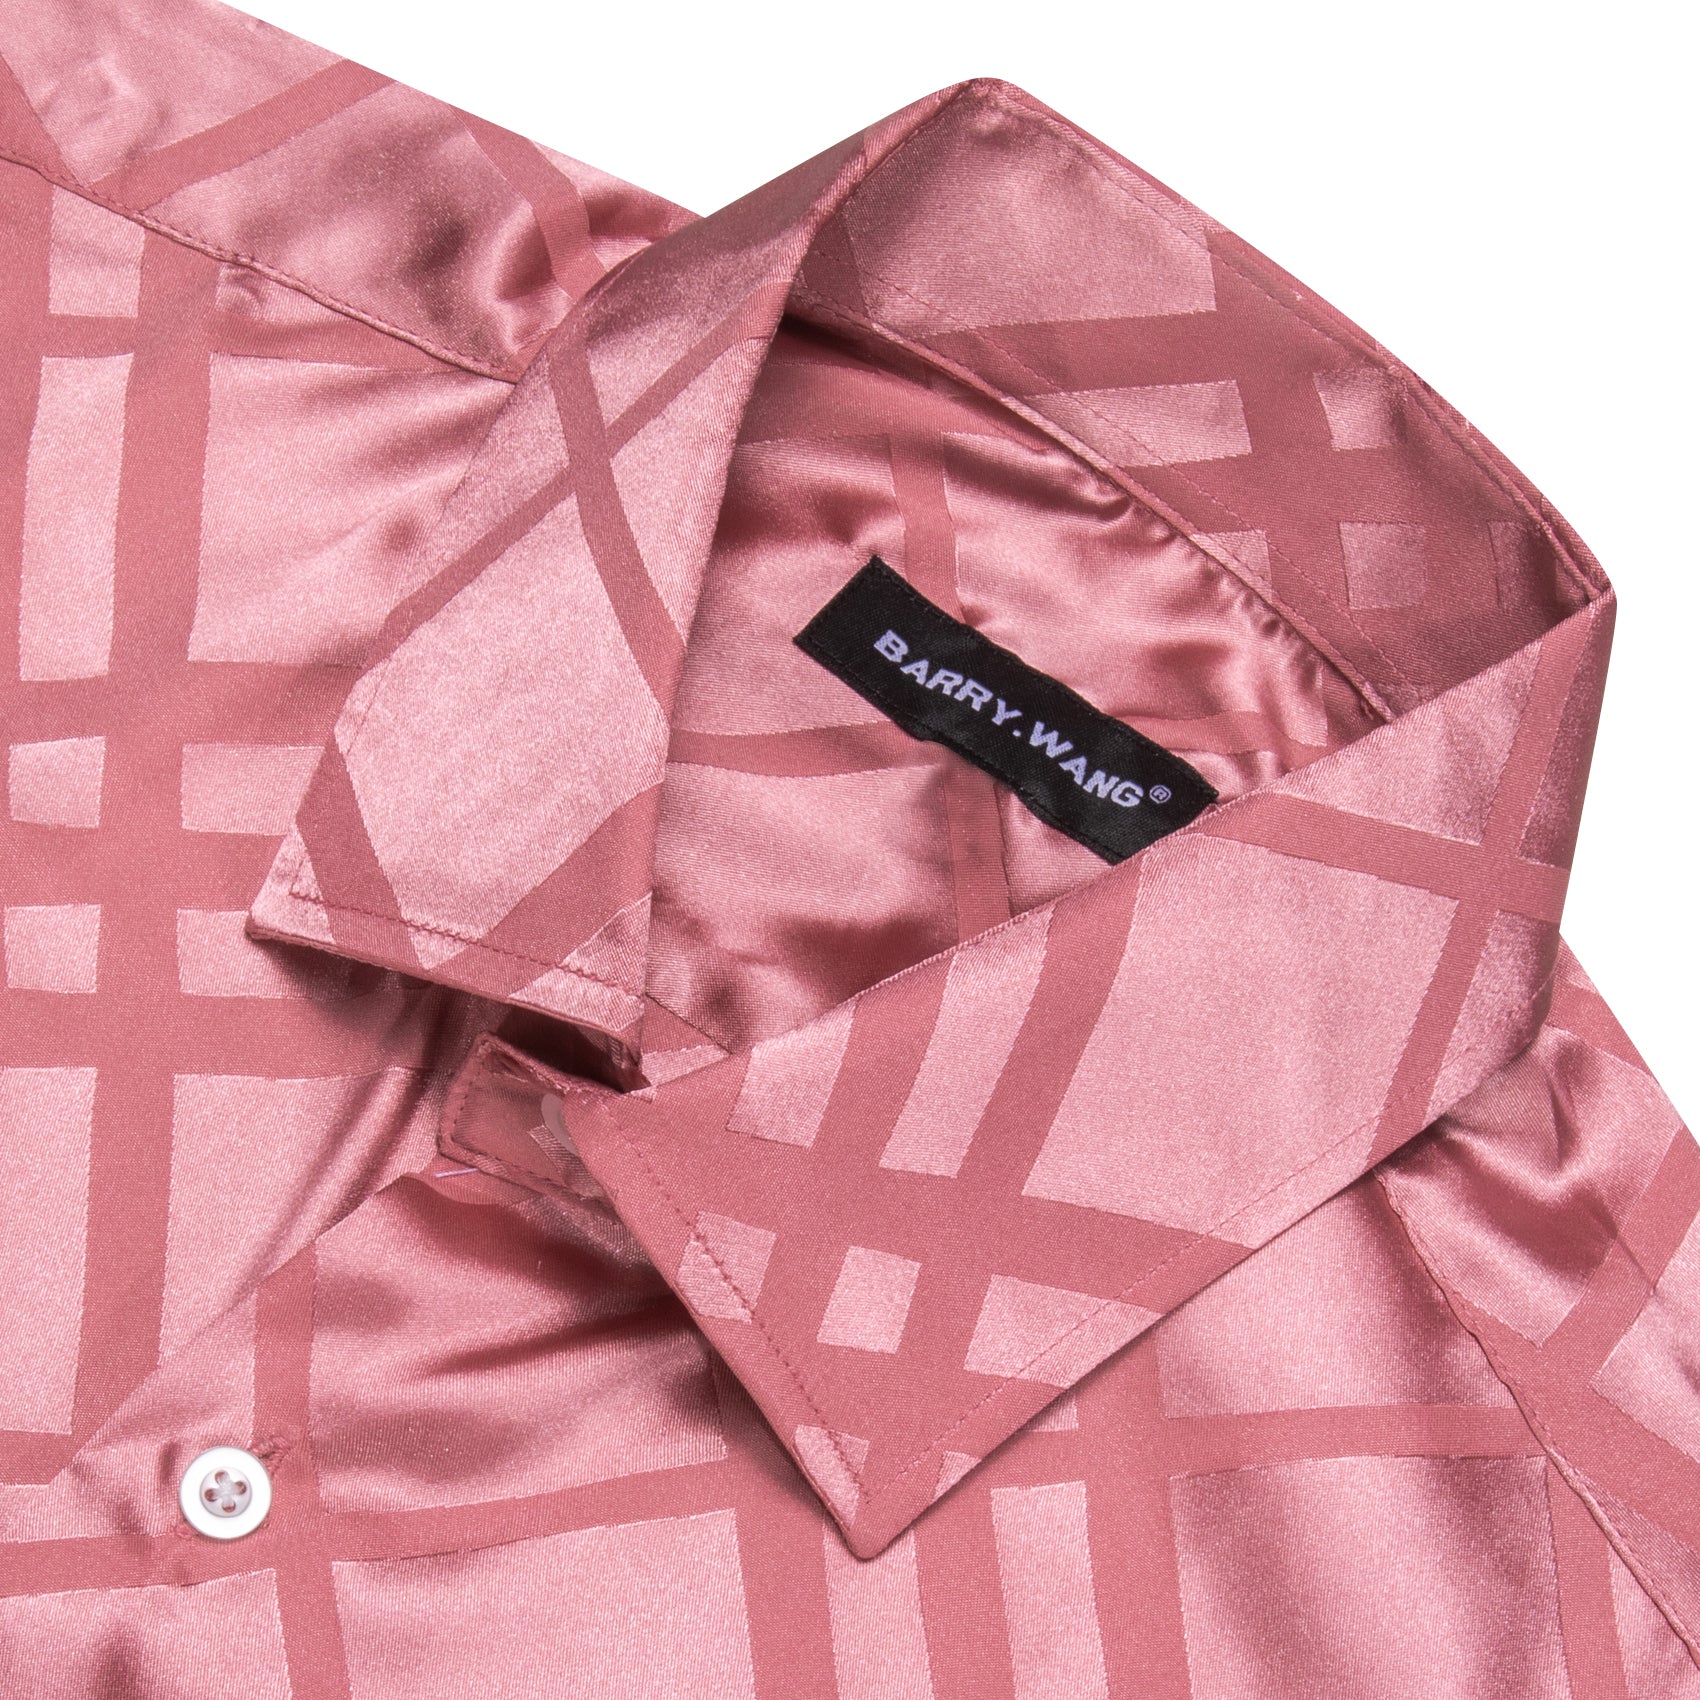 Barry.wang Button Down Shirt Pink Striped Silk Shirt for Mens Fashion